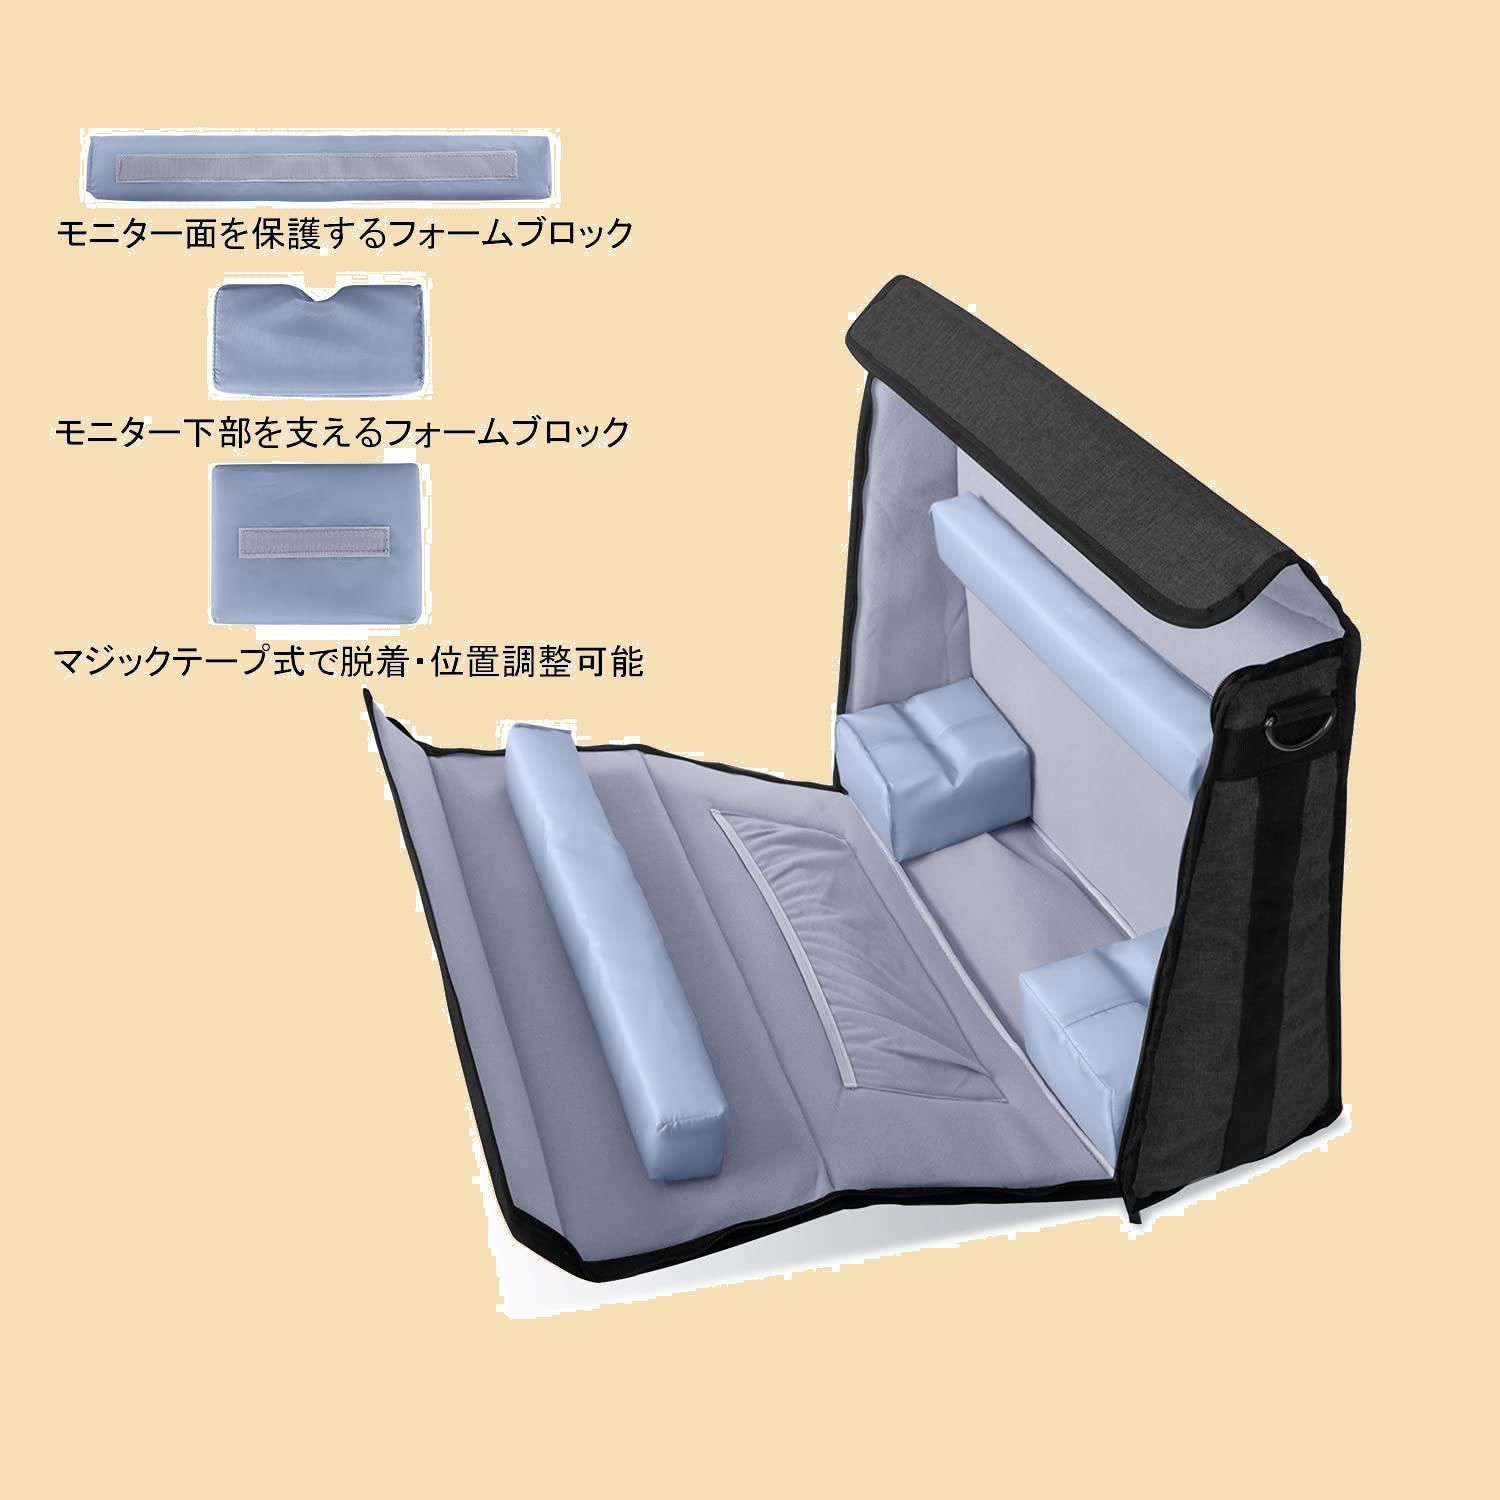 Damero iMac用バッグ 21.5インチ imac 持ち運び トートバッグ 周辺機器